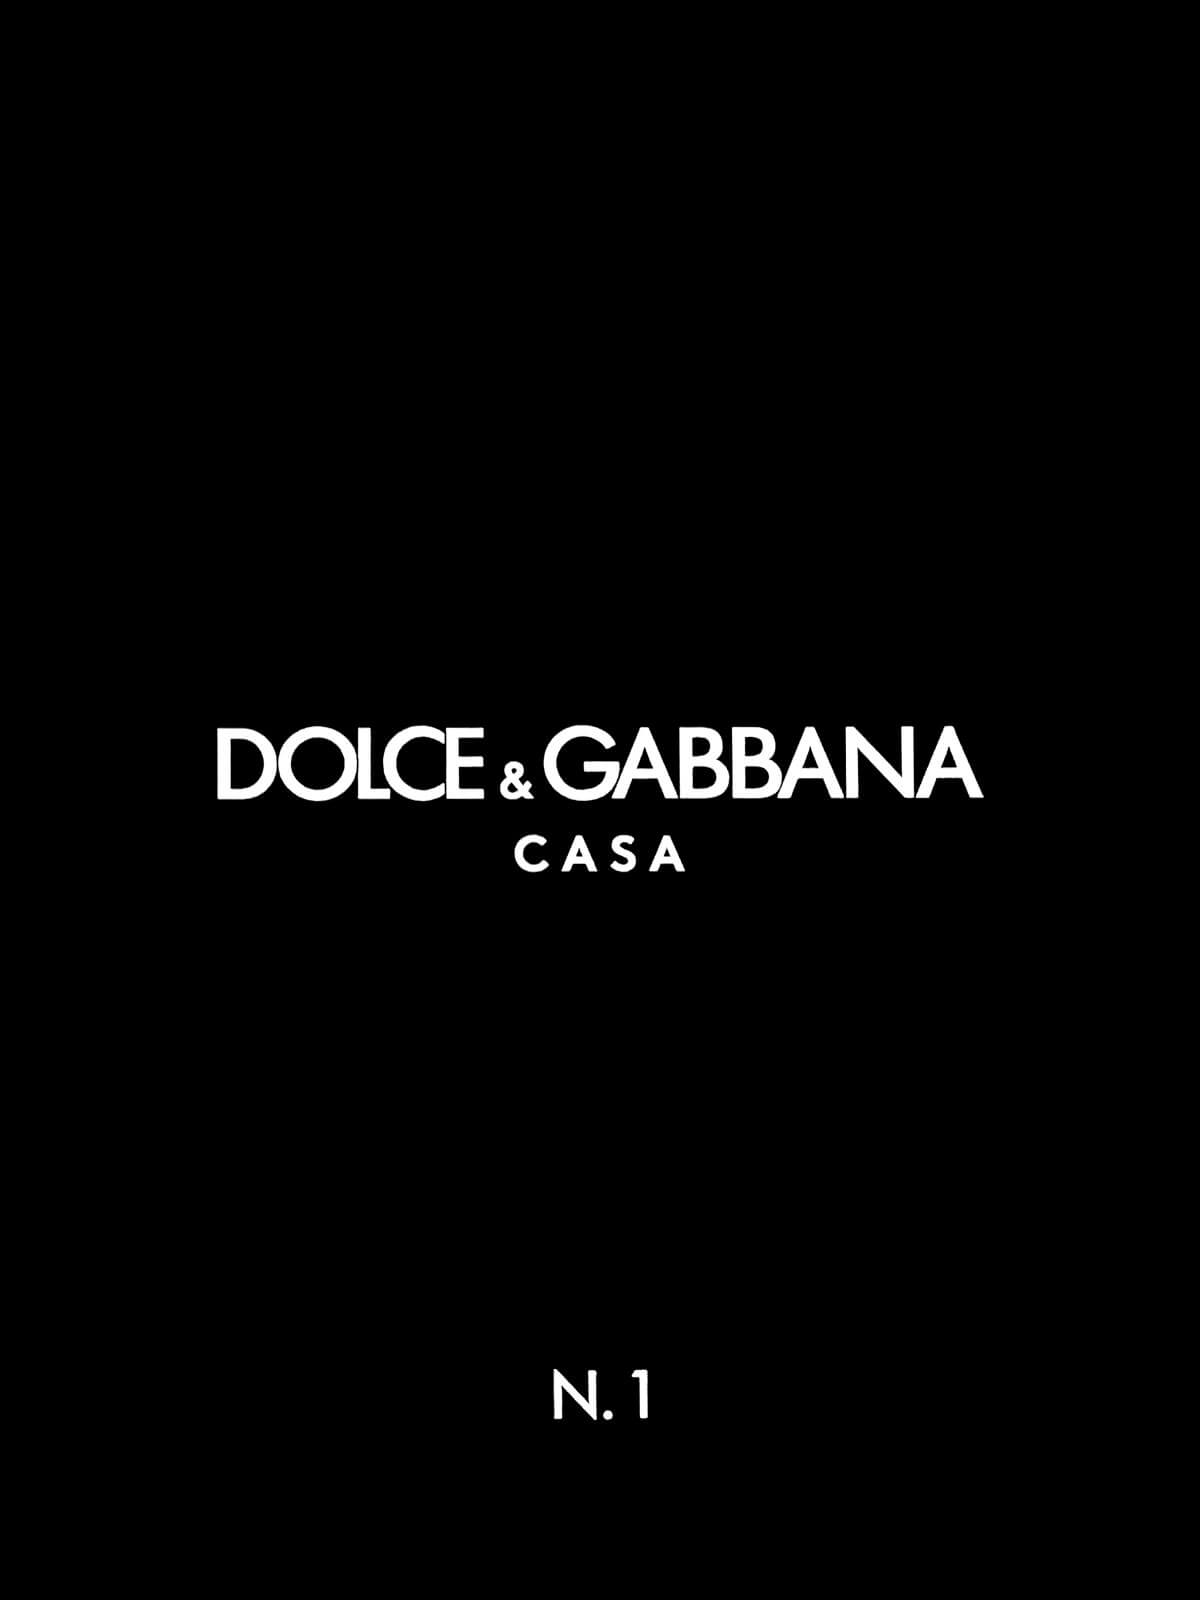 Seabrook Dolce & Gabbana Carretto Wallpaper Mural - Giulianna